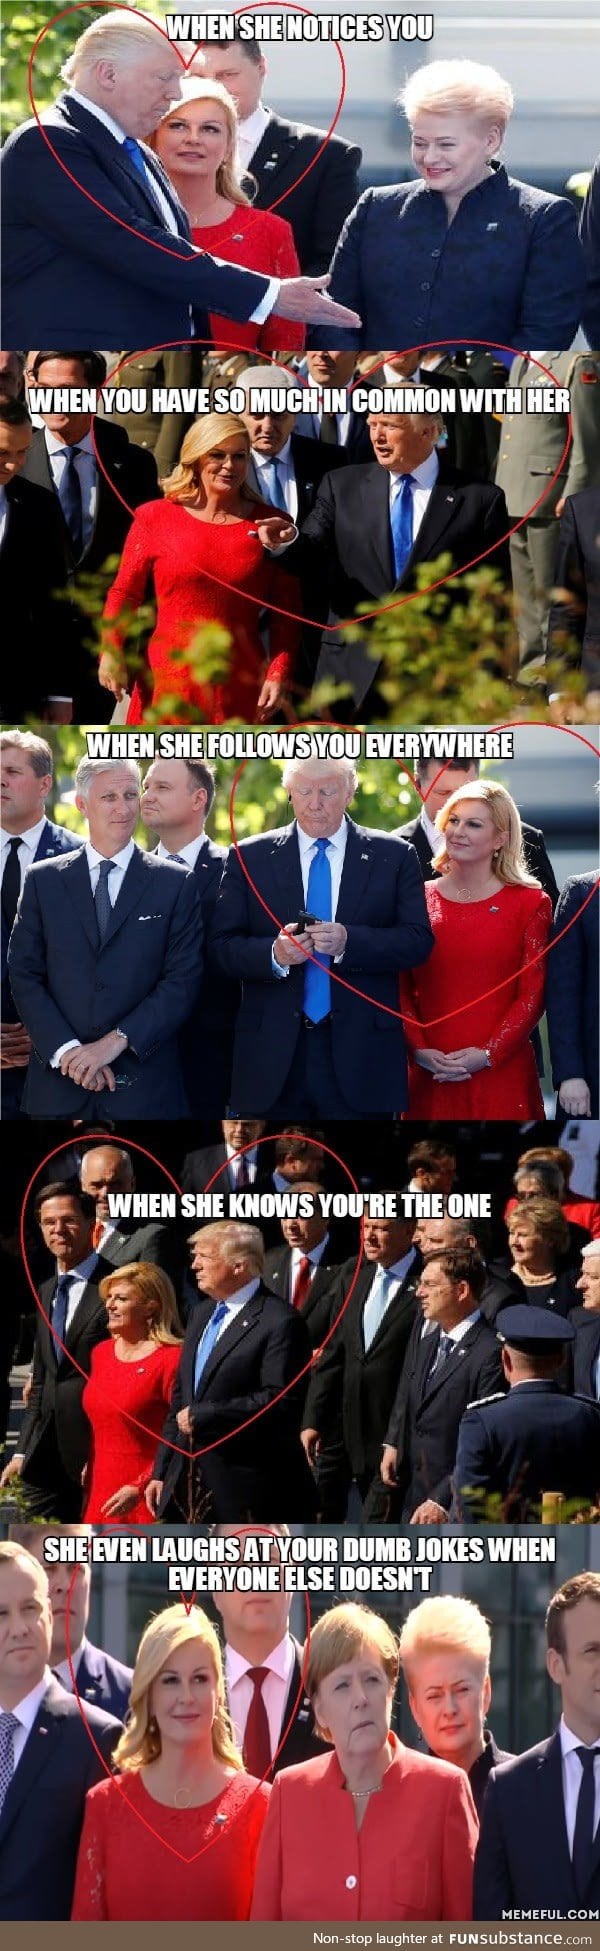 President of Croatia, admiring Trump